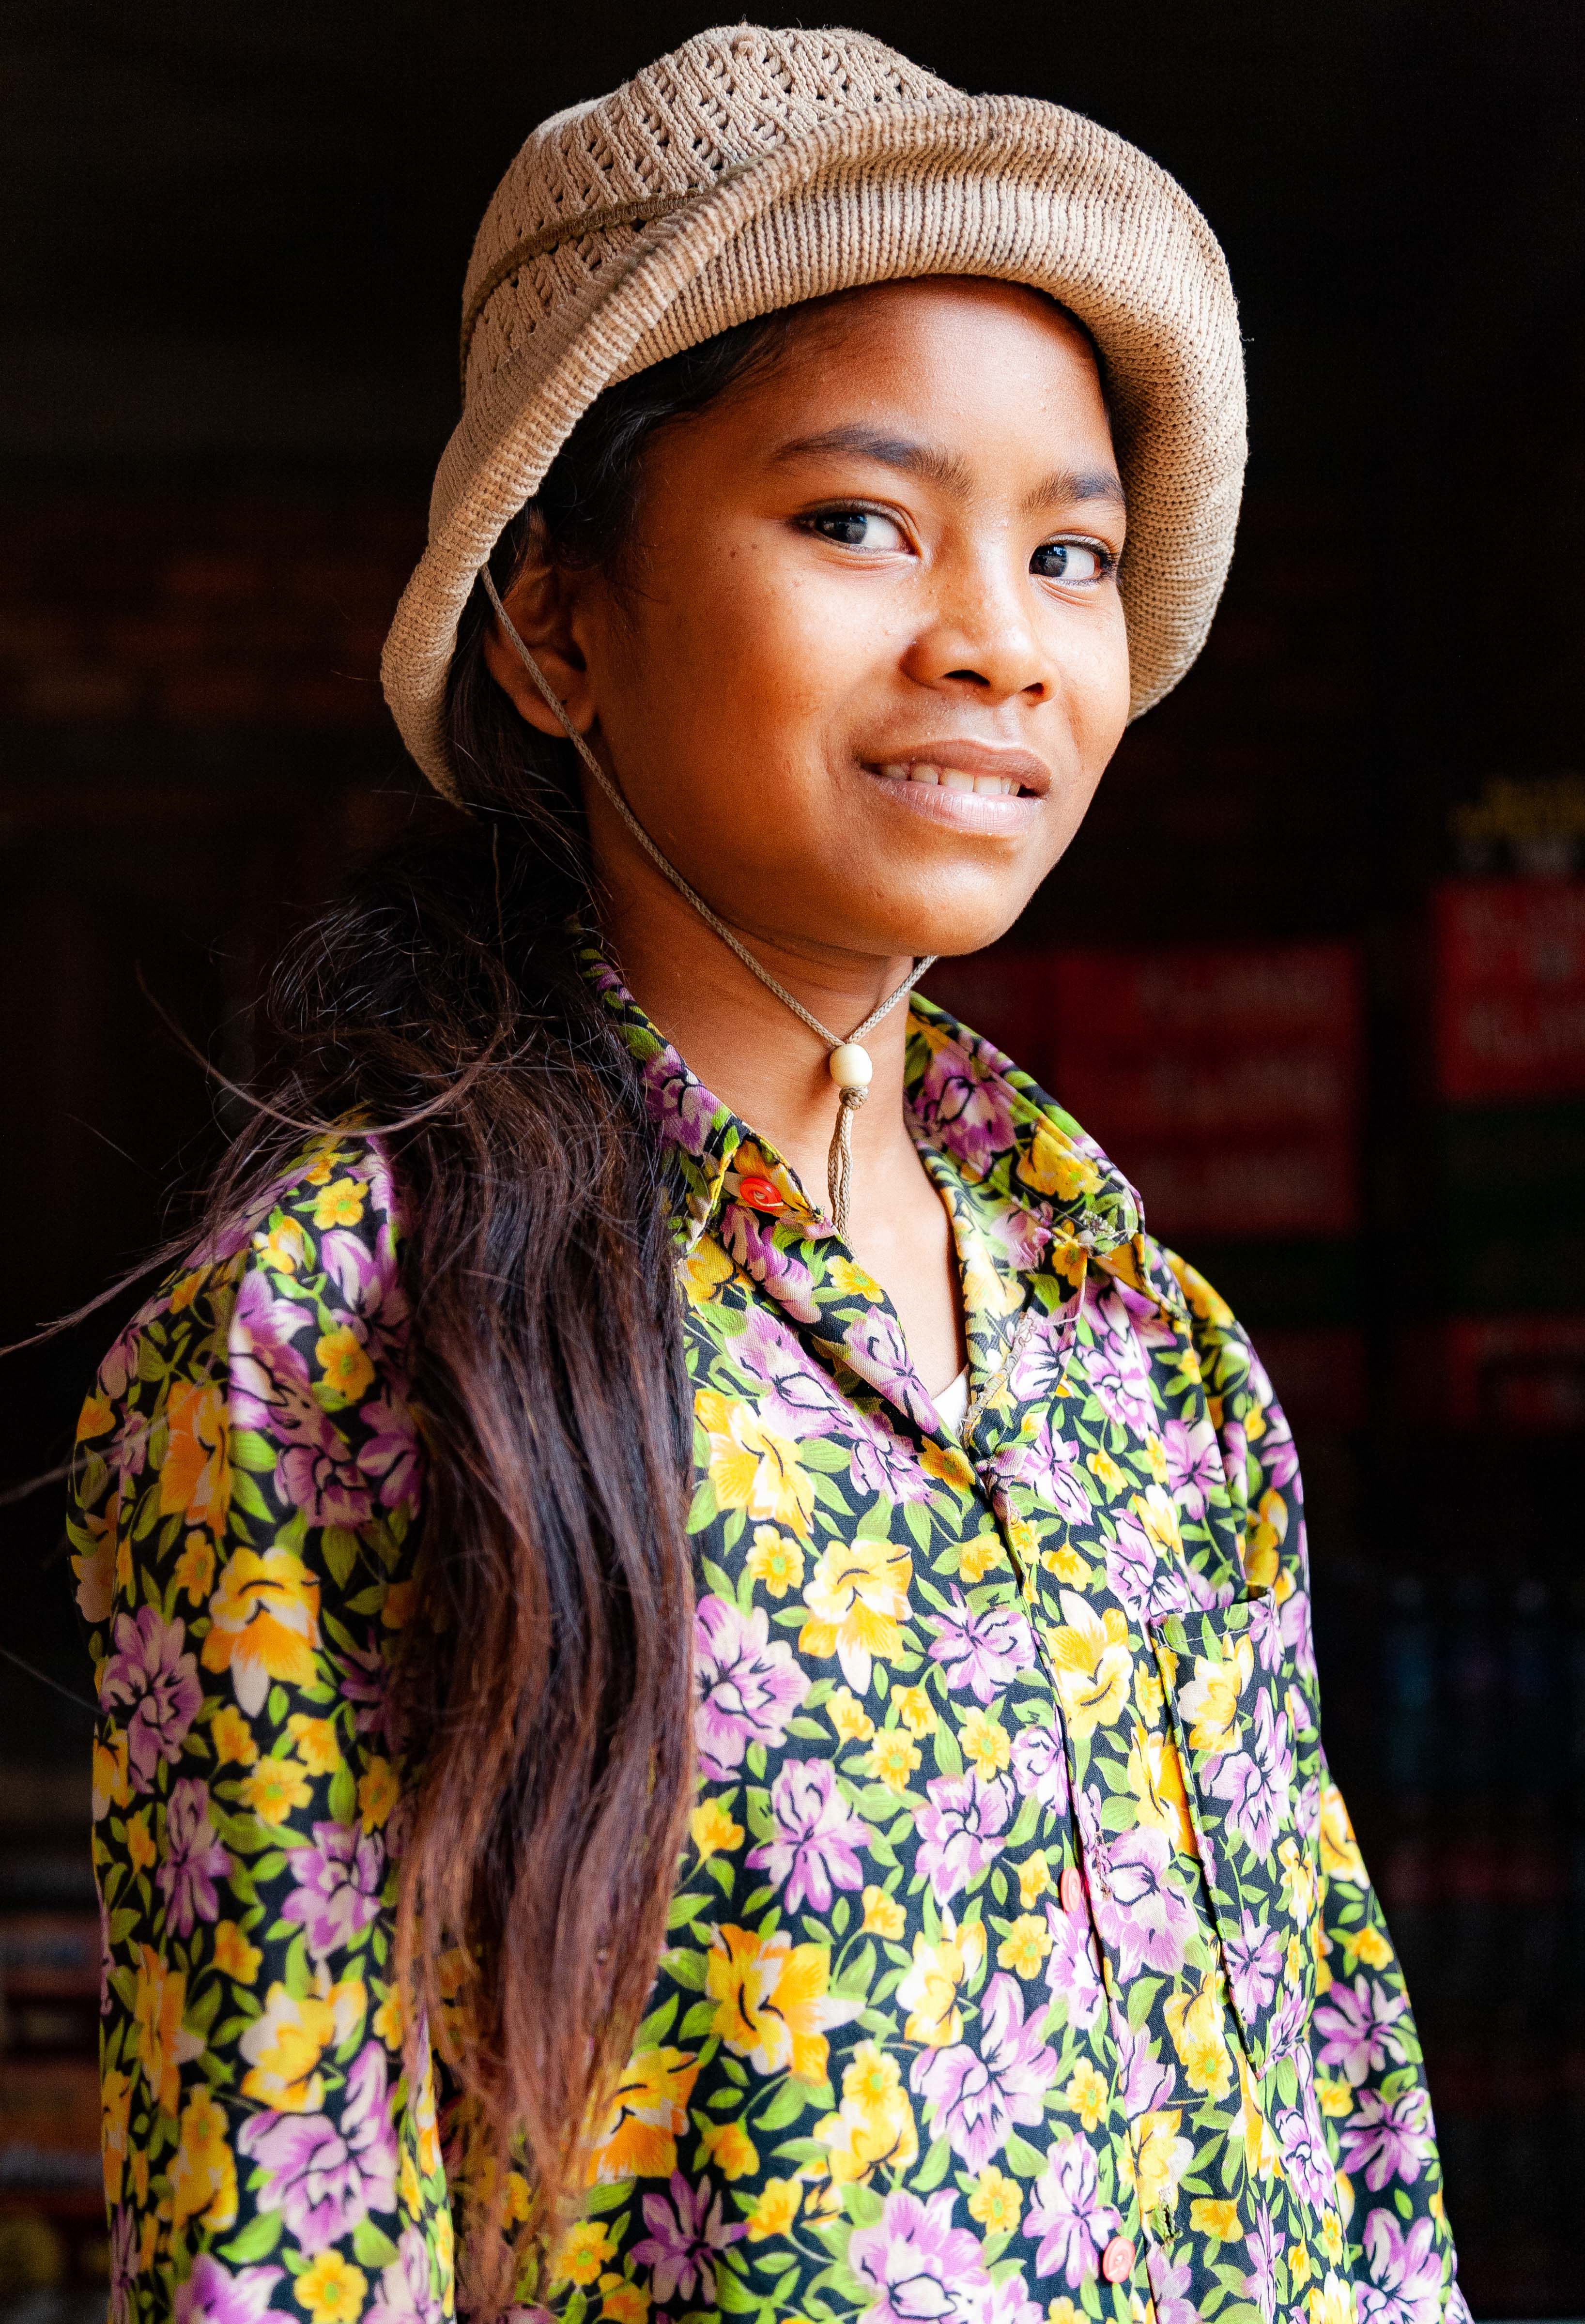 Cambodia, Kampong Thum Prov, Country Girl, 2010, IMG 5544